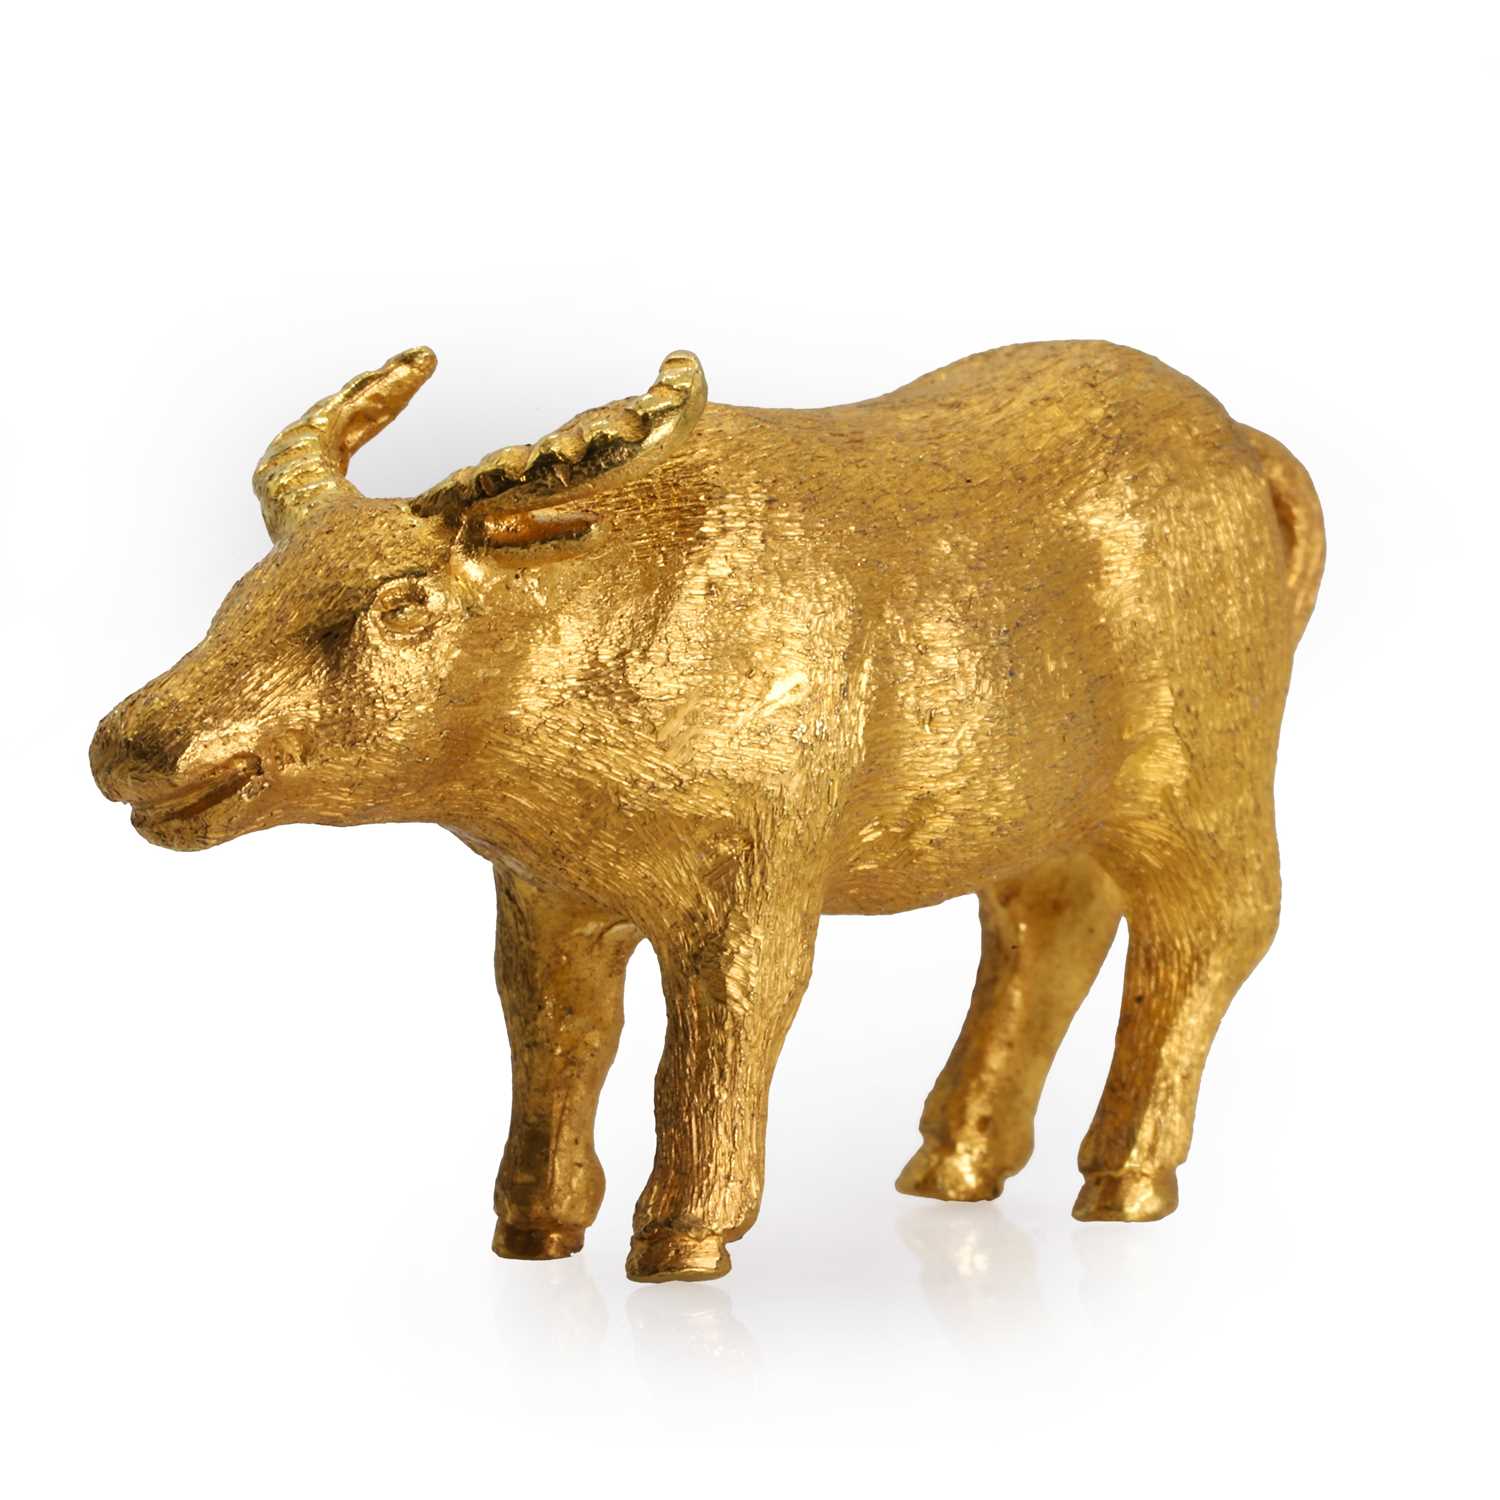 A gold ox ornament,